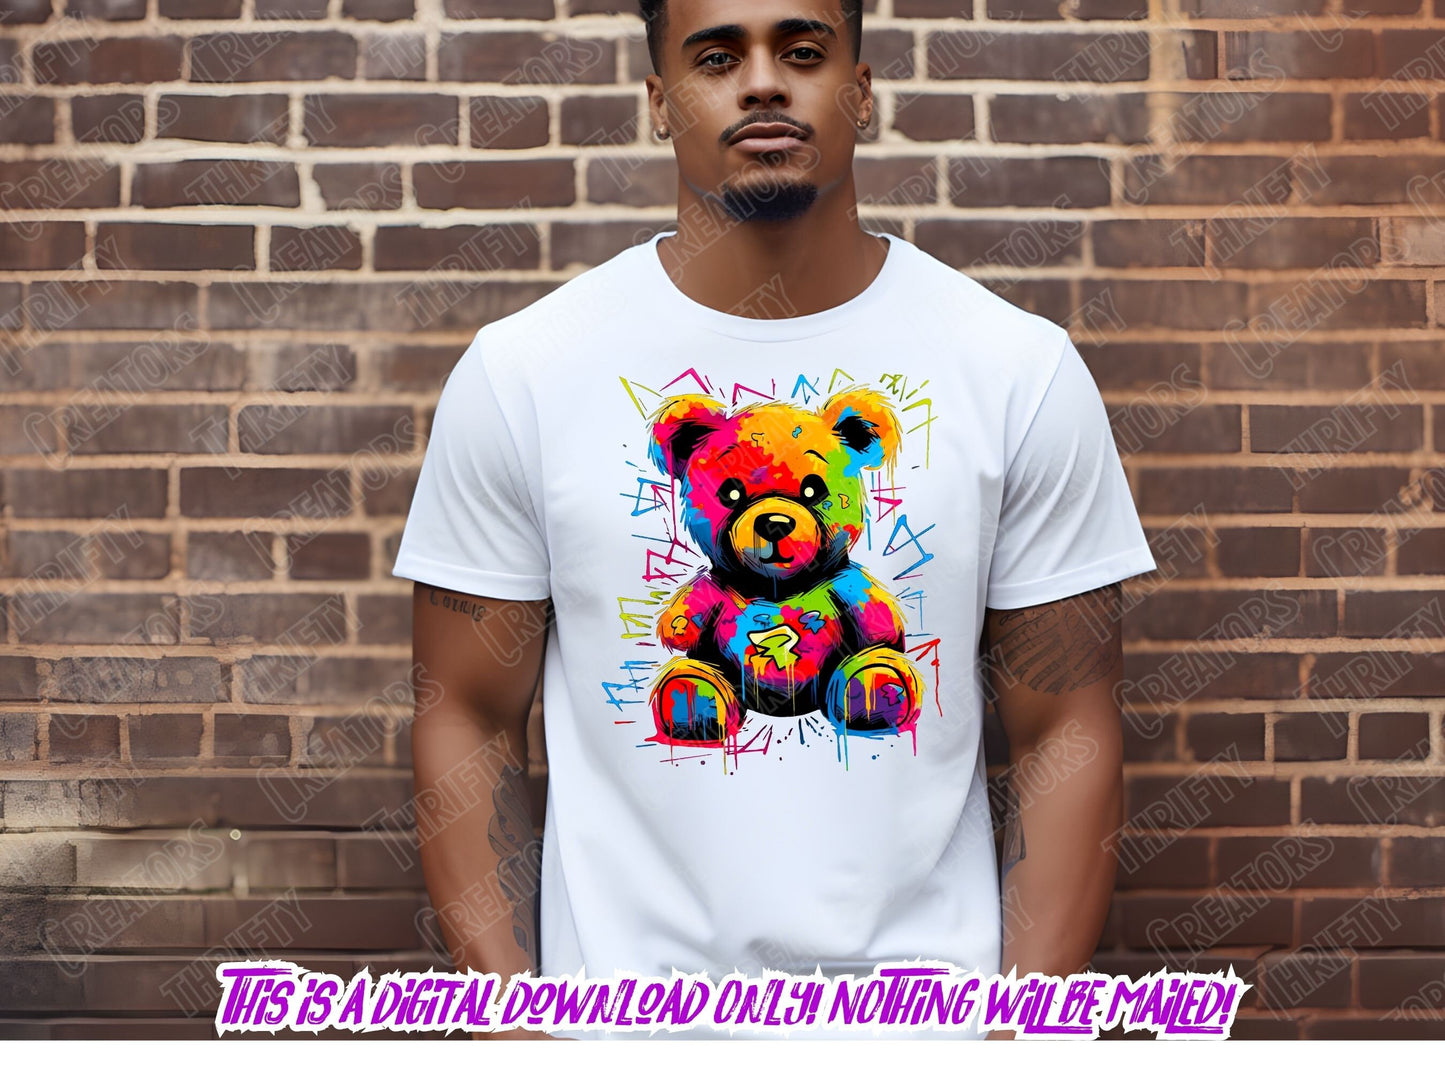 Teddy Bear png, hoodie designs, t-Shirt designs, dtf images, sublimate designs, sweatshirt design, dtf transfer png, sublimate designs kid